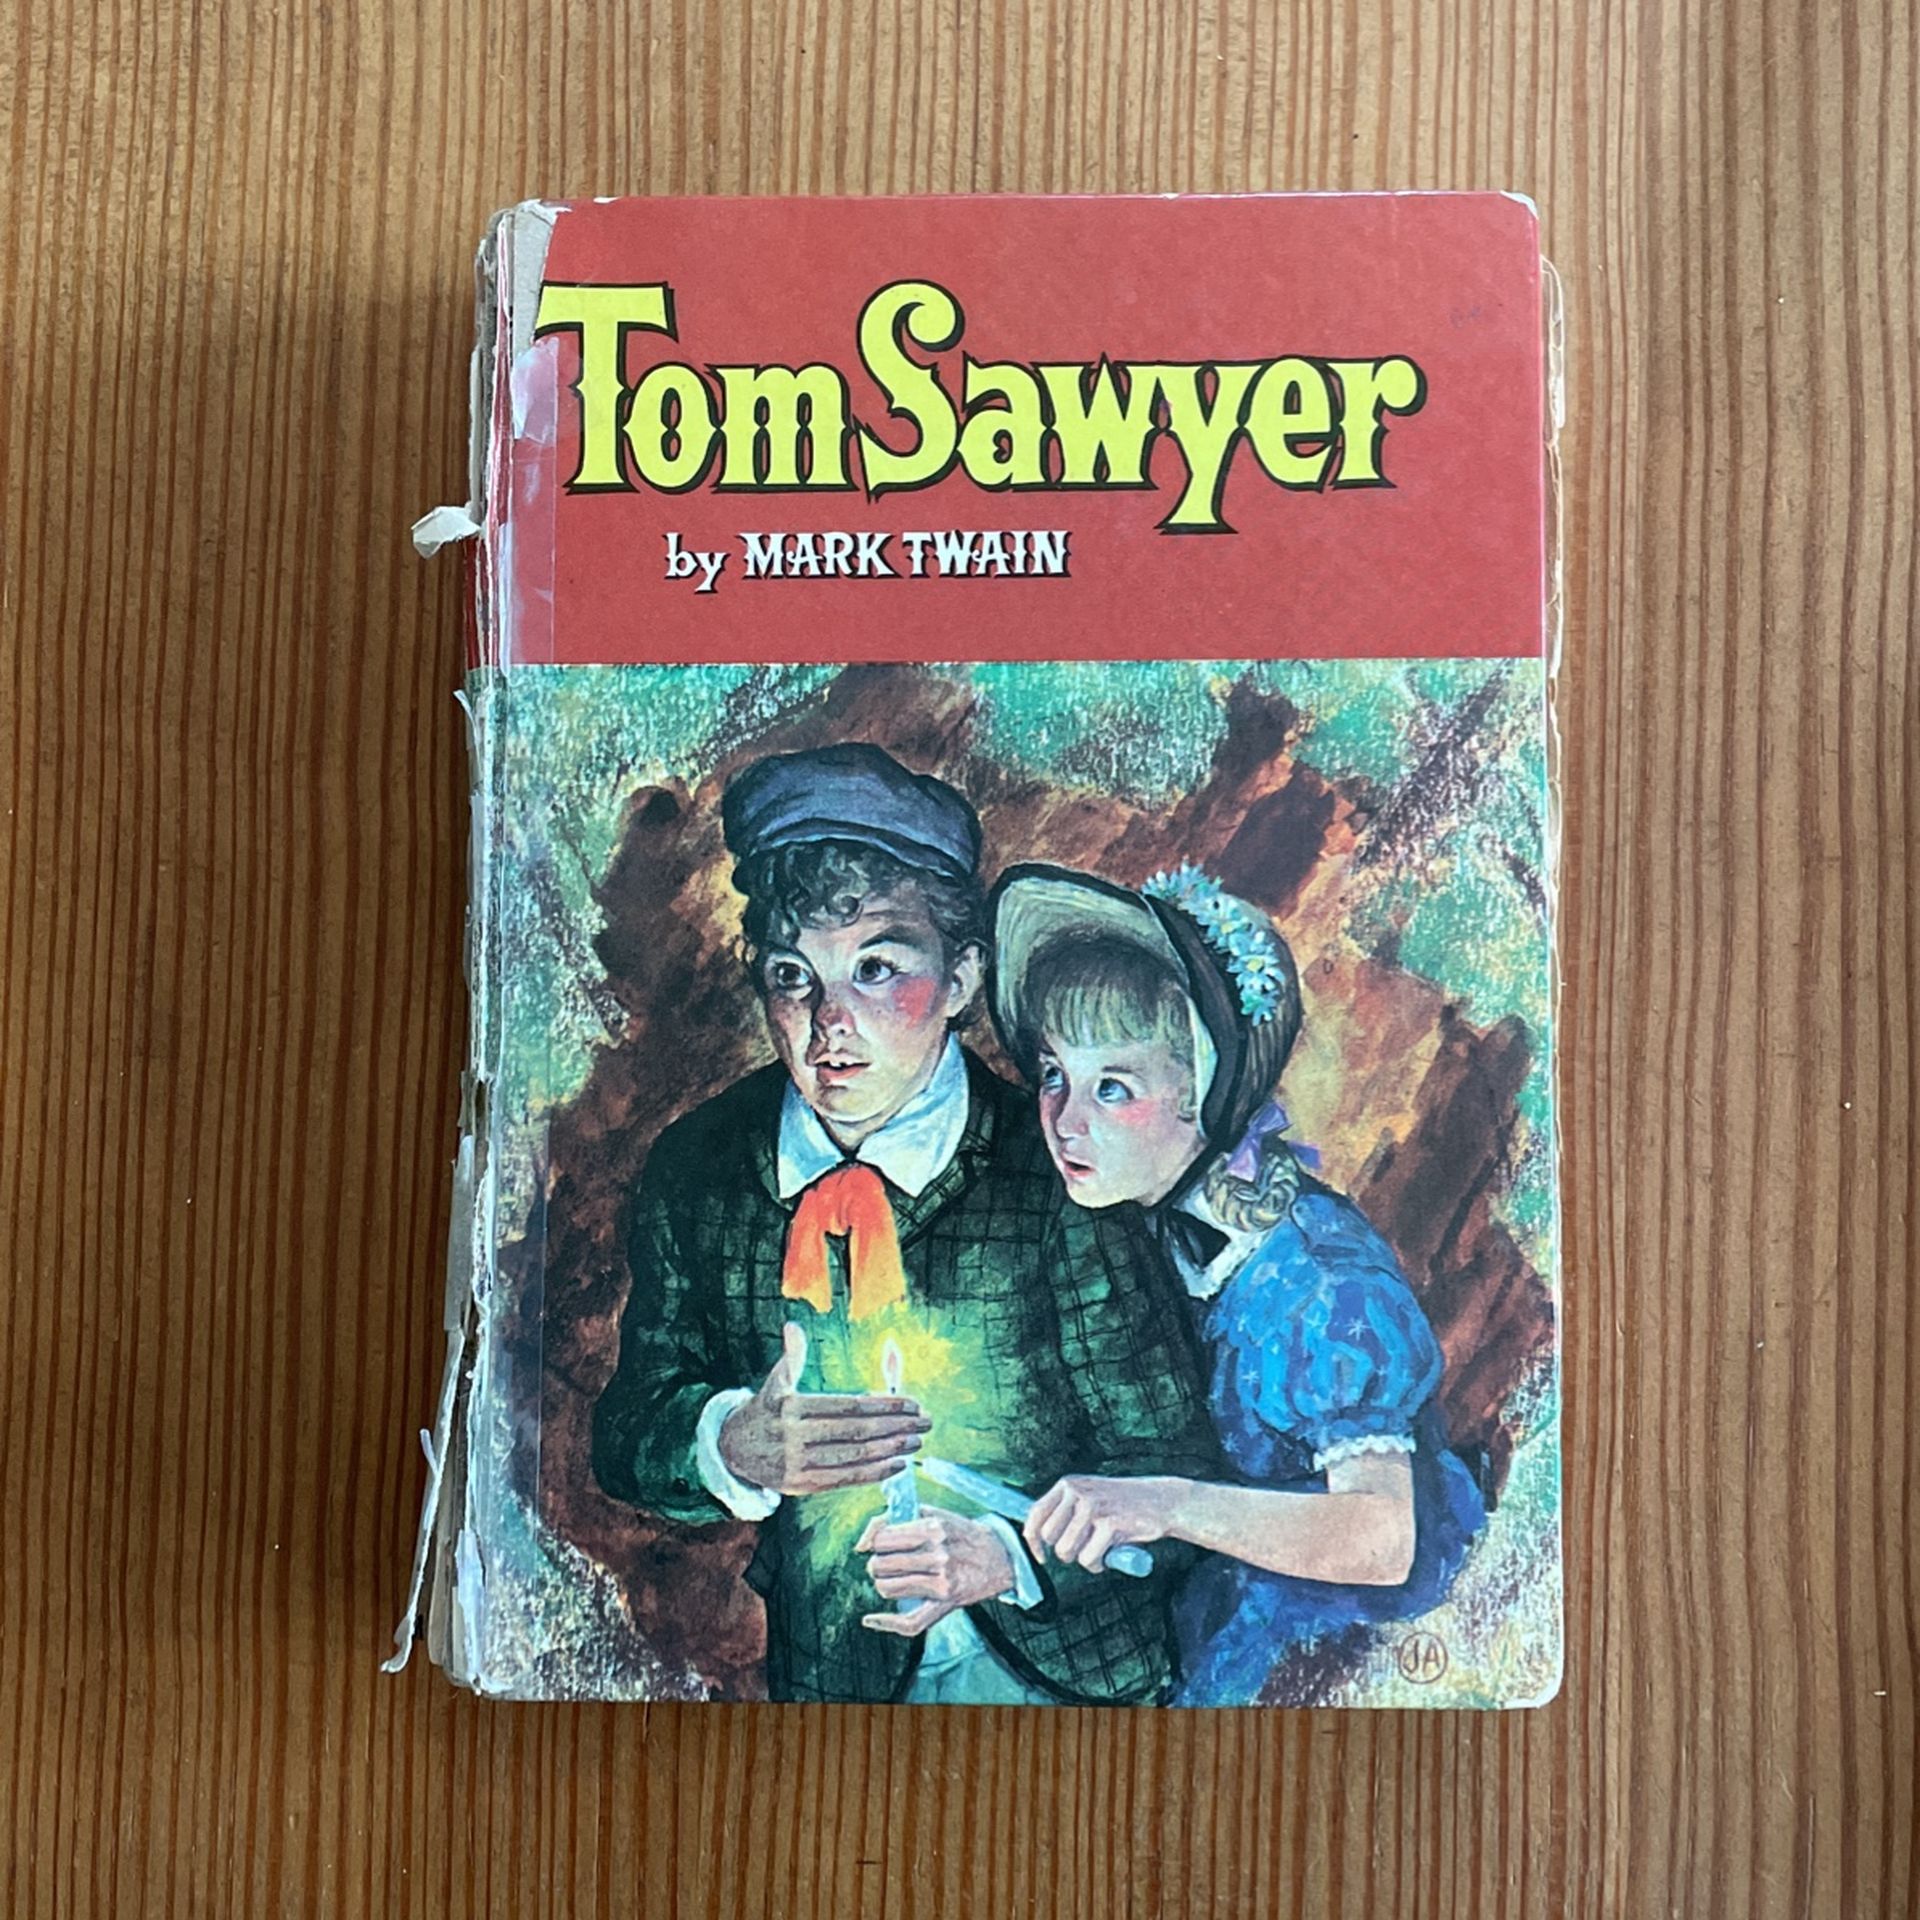 The Adventures Of Tom Sawyer By Mark Twain